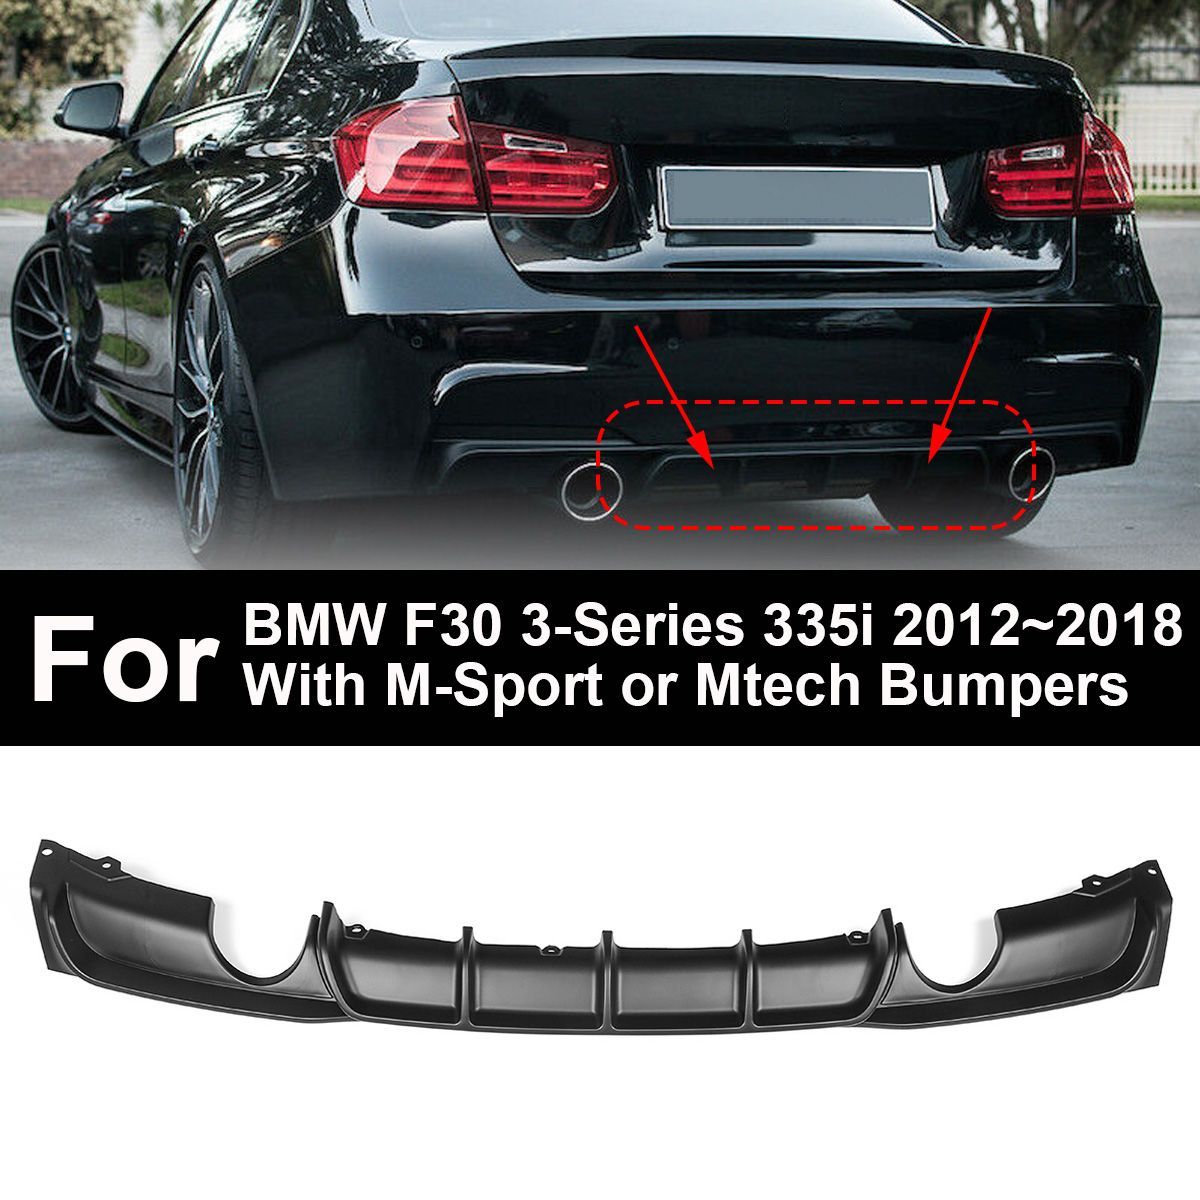 Rear-Bumper-Diffuser-Protector-For-BMW-F30-3-Series-320i-328i-335i-M-Sport-Mtech-12-18-1488354